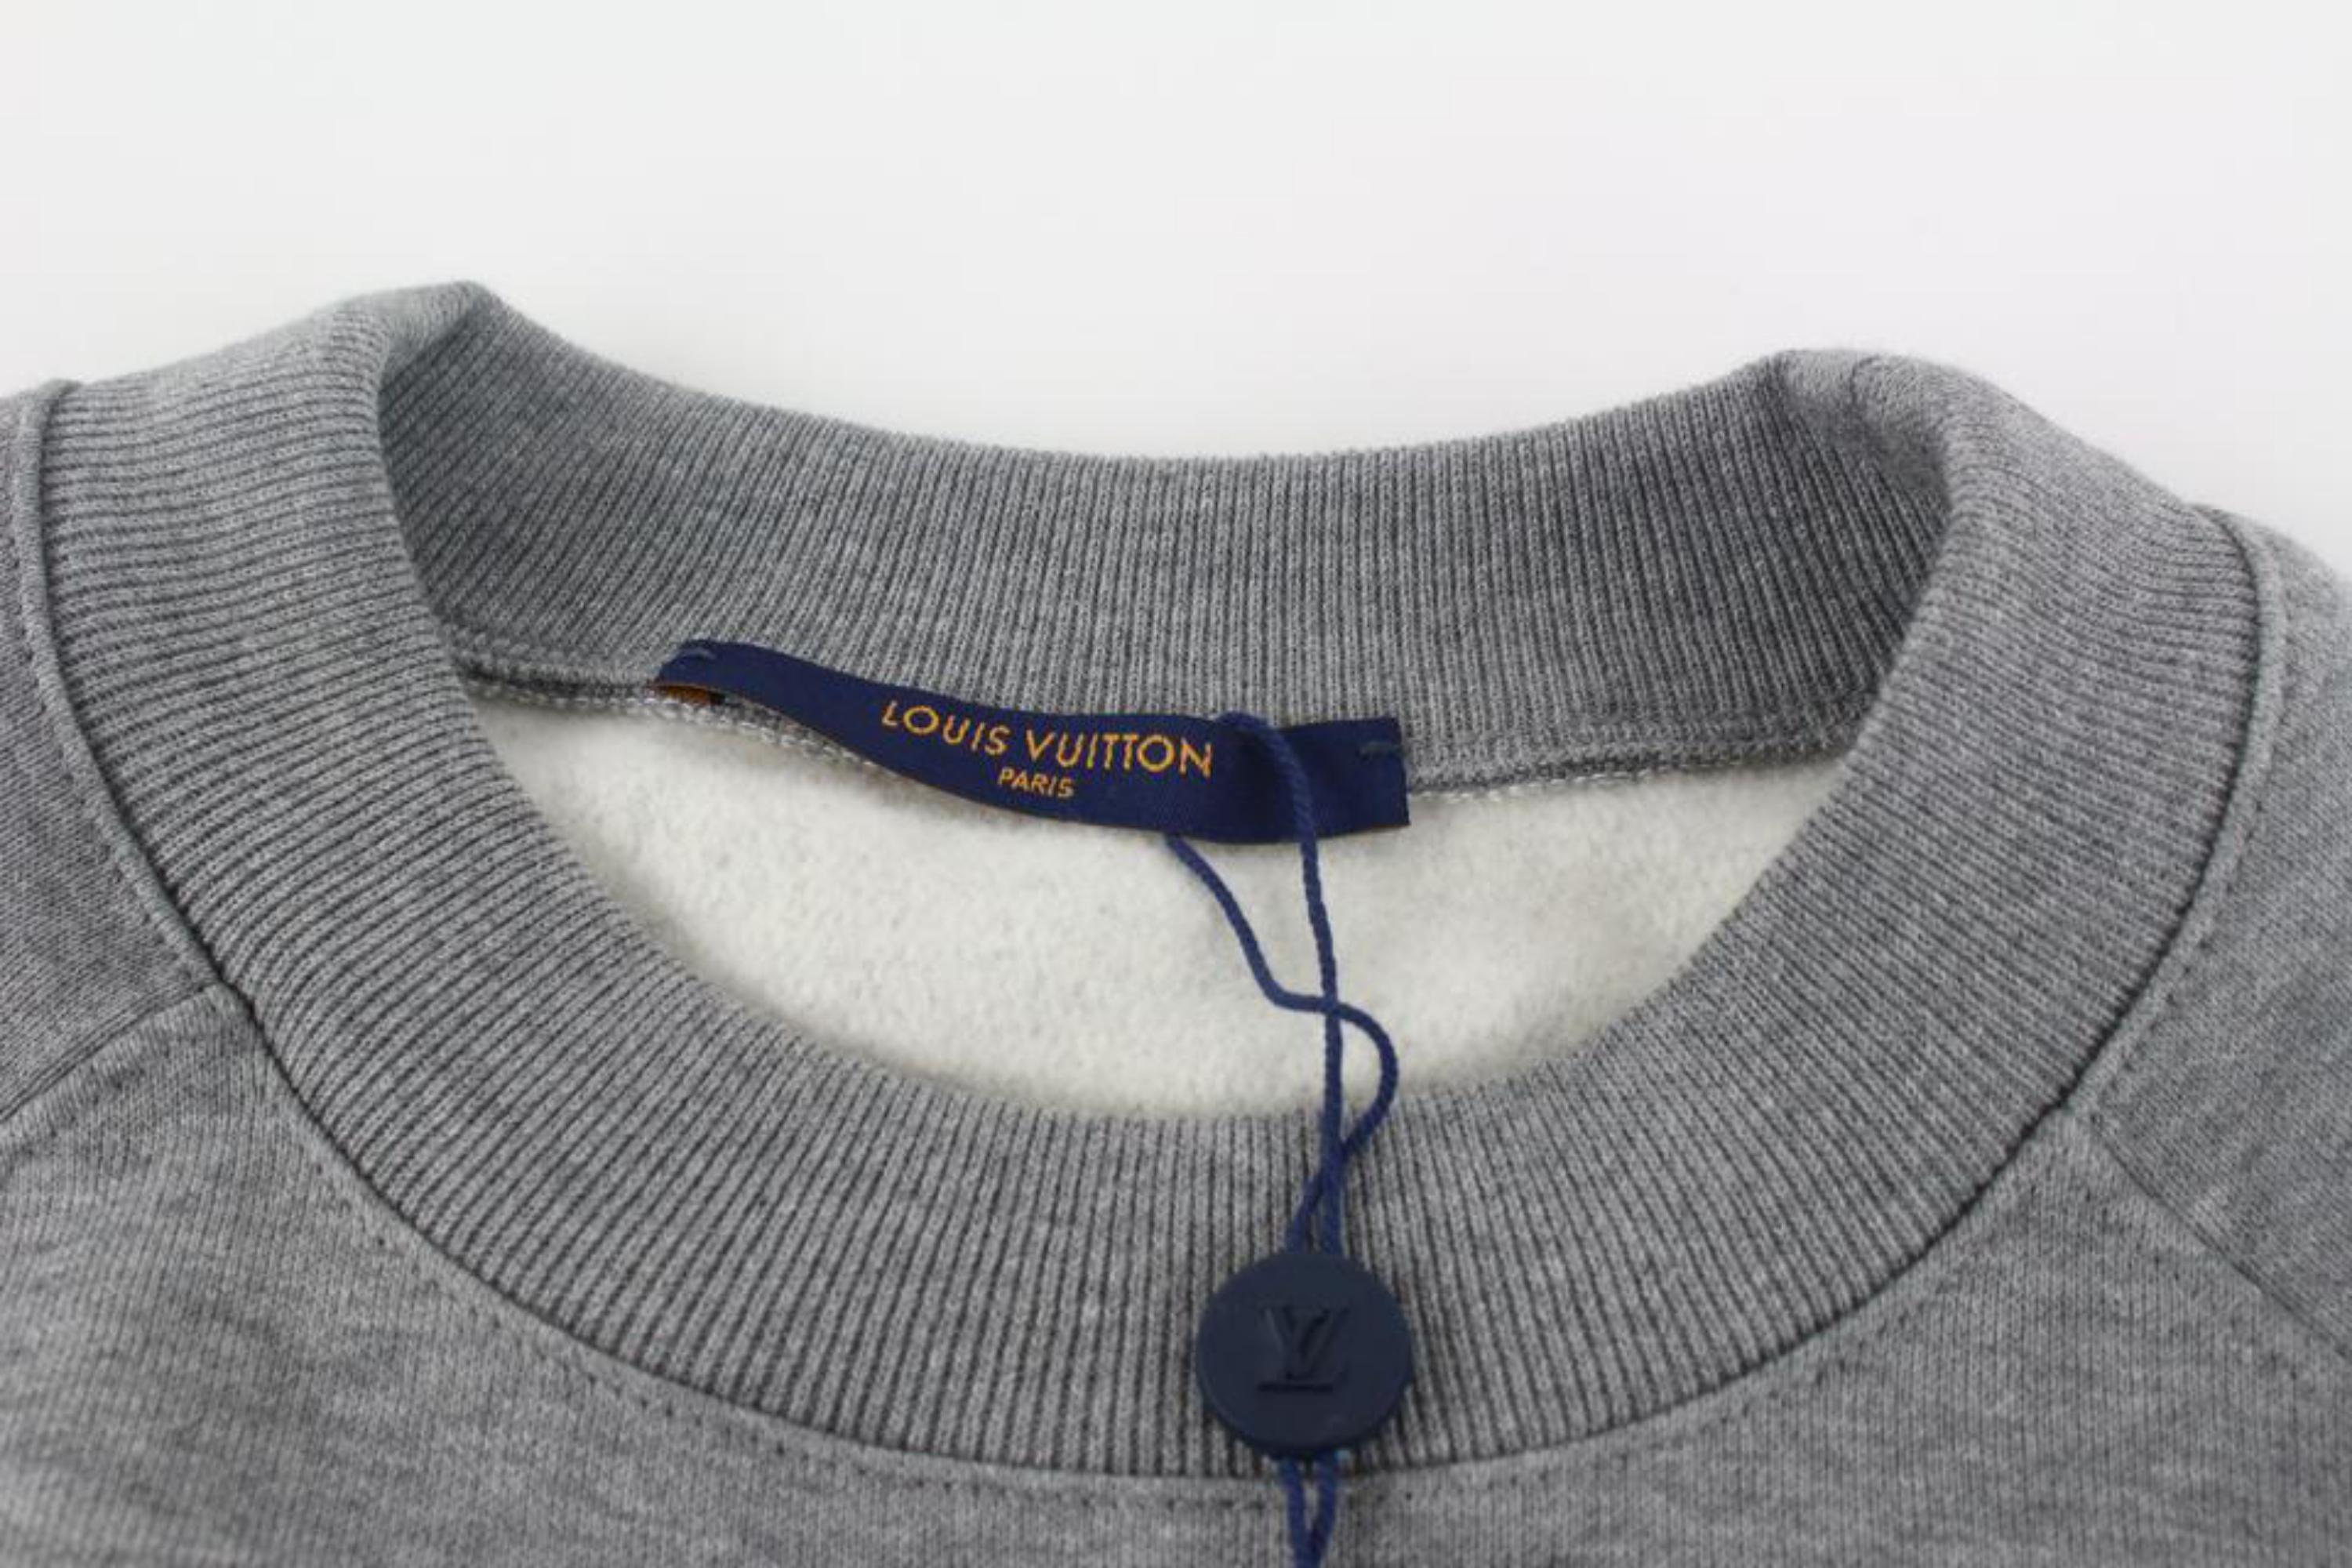 Louis Vuitton Sweatshirt Mens - 3 For Sale on 1stDibs  men's louis vuitton  sweatshirt, louis vuitton sweatshirt men's, mens louis vuitton jumper